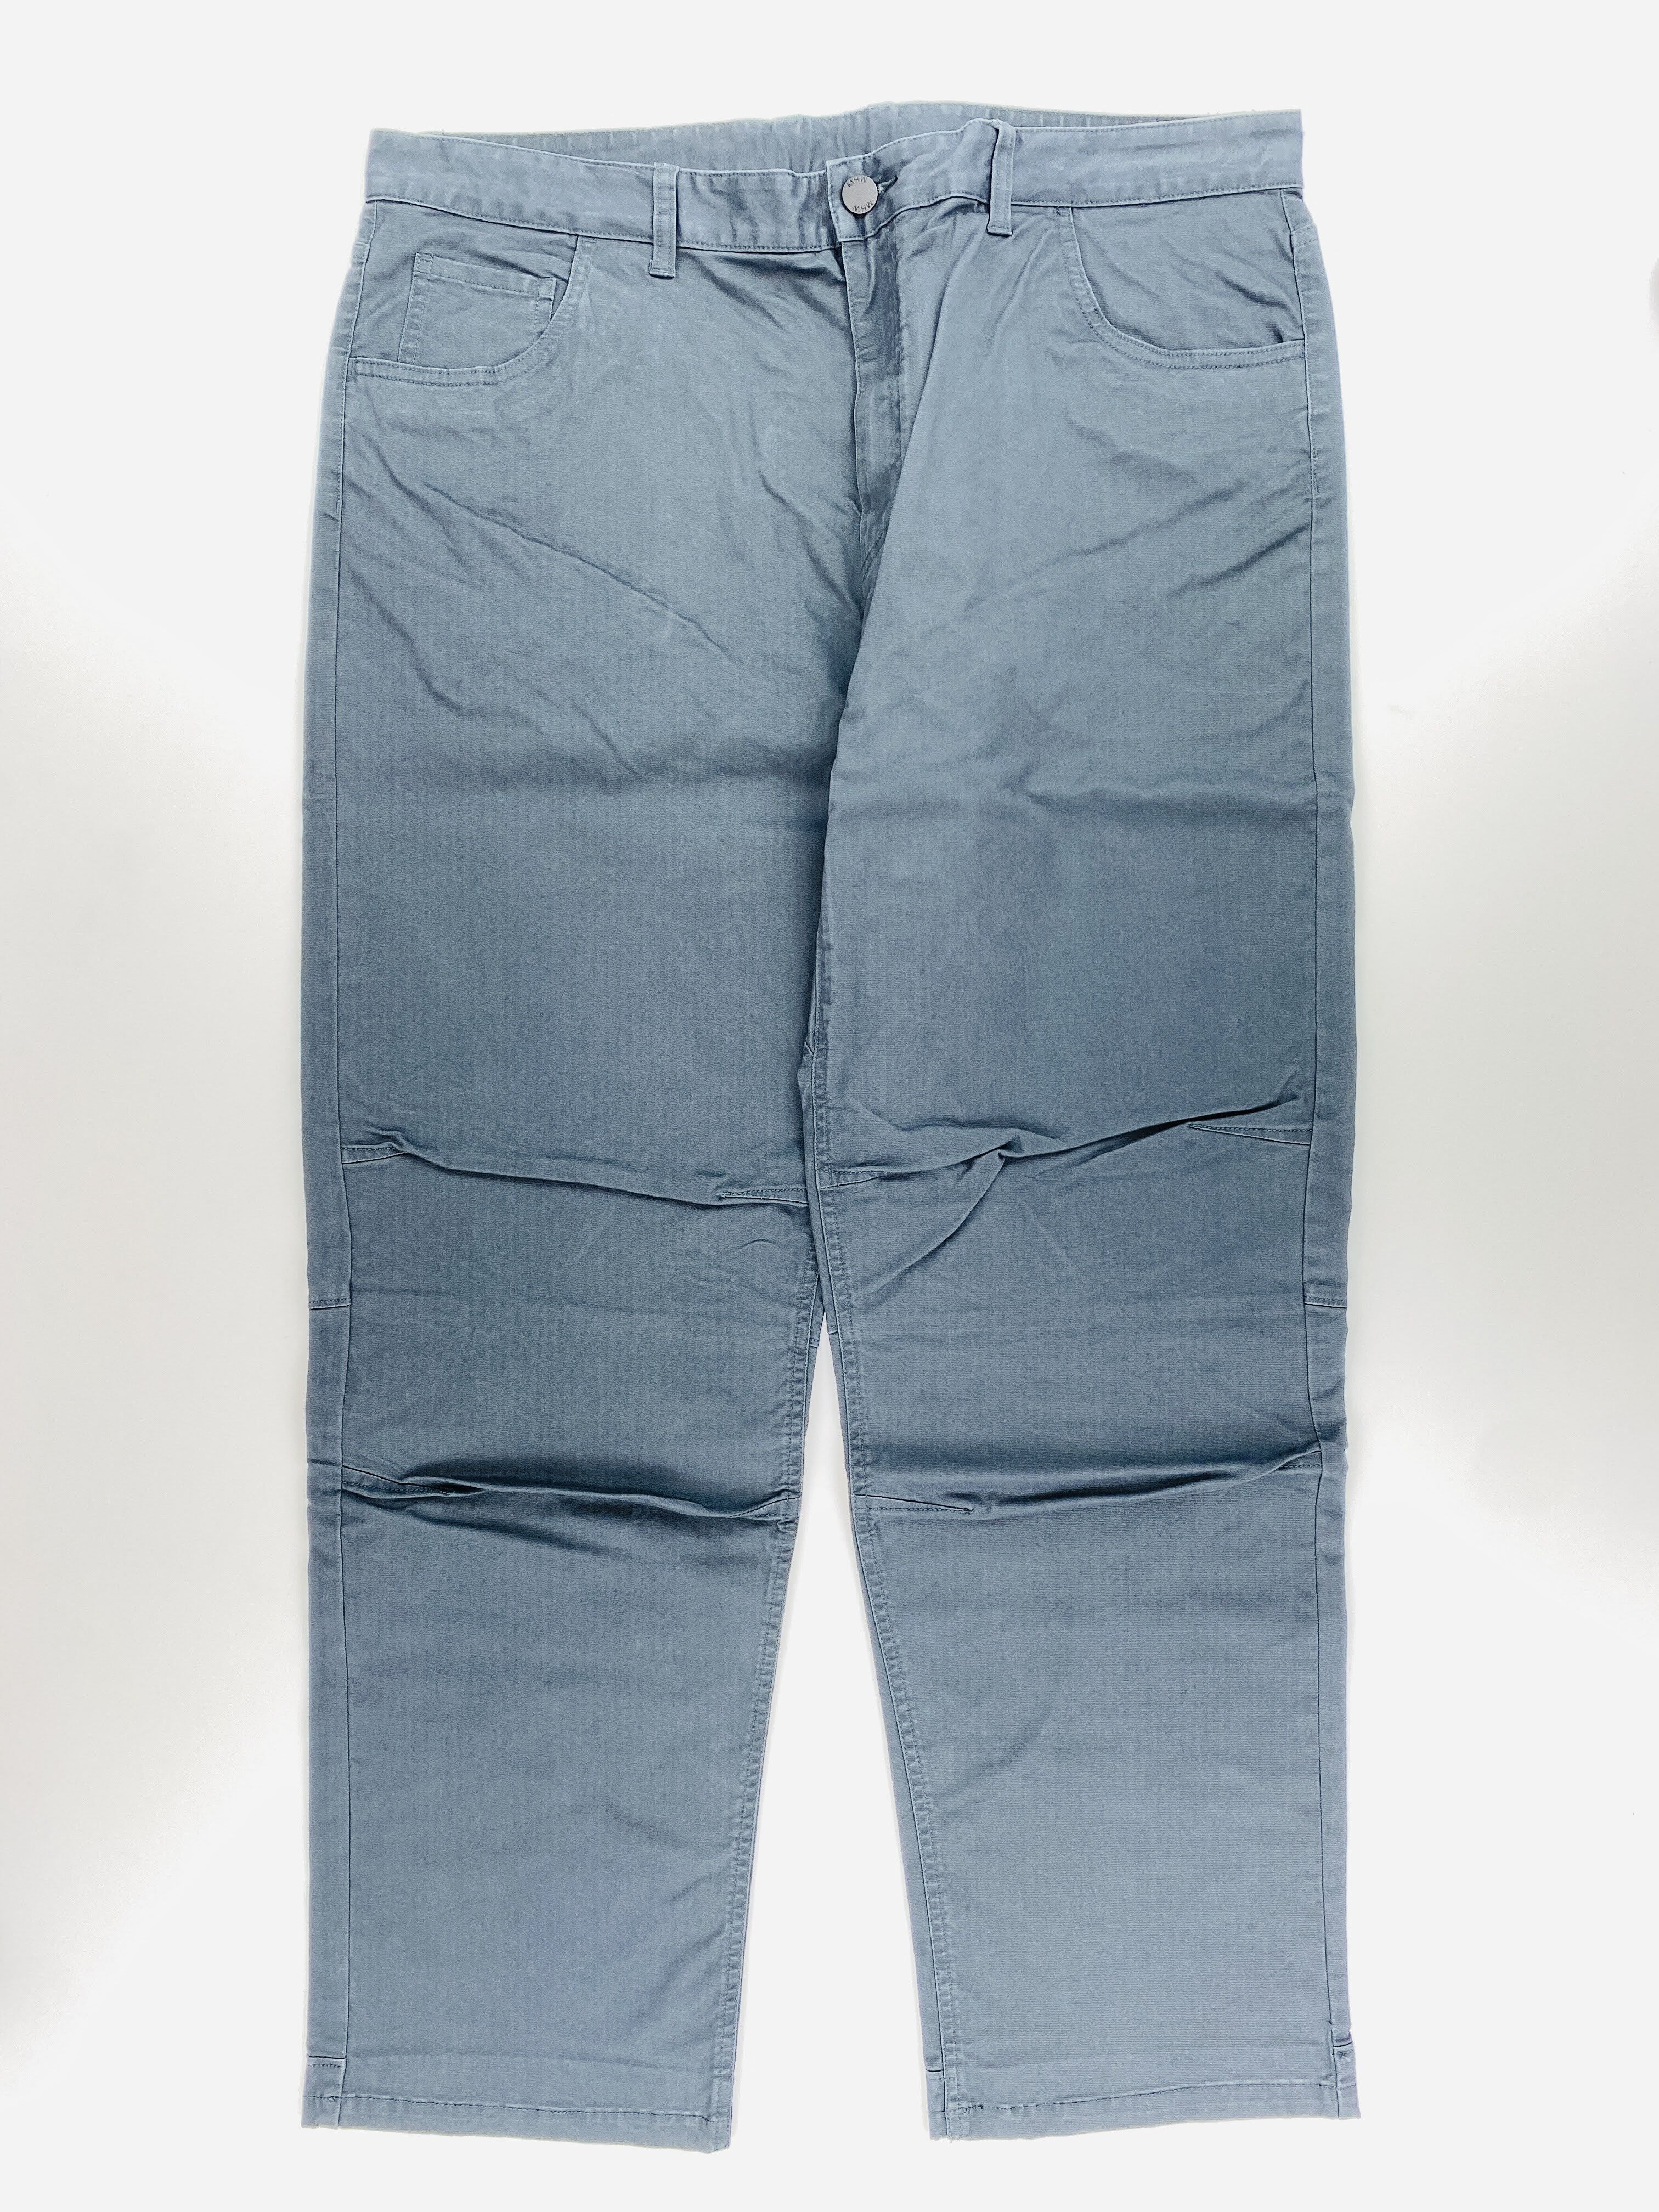 Mountain Hardwear Cederberg Man Pant Regular - Seconde main Pantalon homme - Noir - US 40 | Hardloop